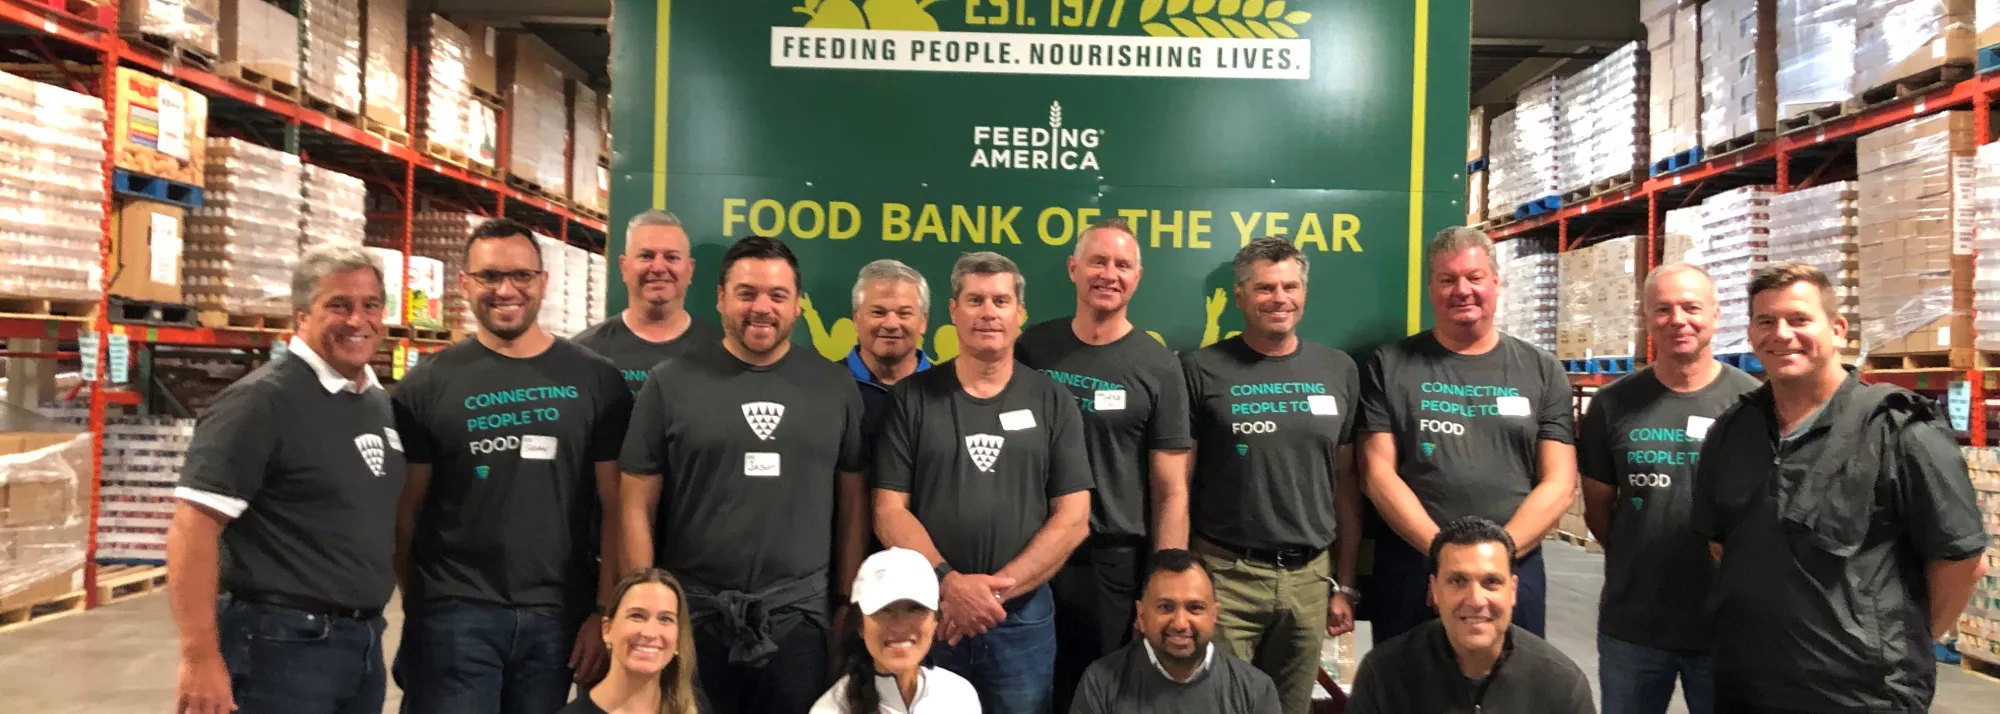 Executive team volunteering at food bank